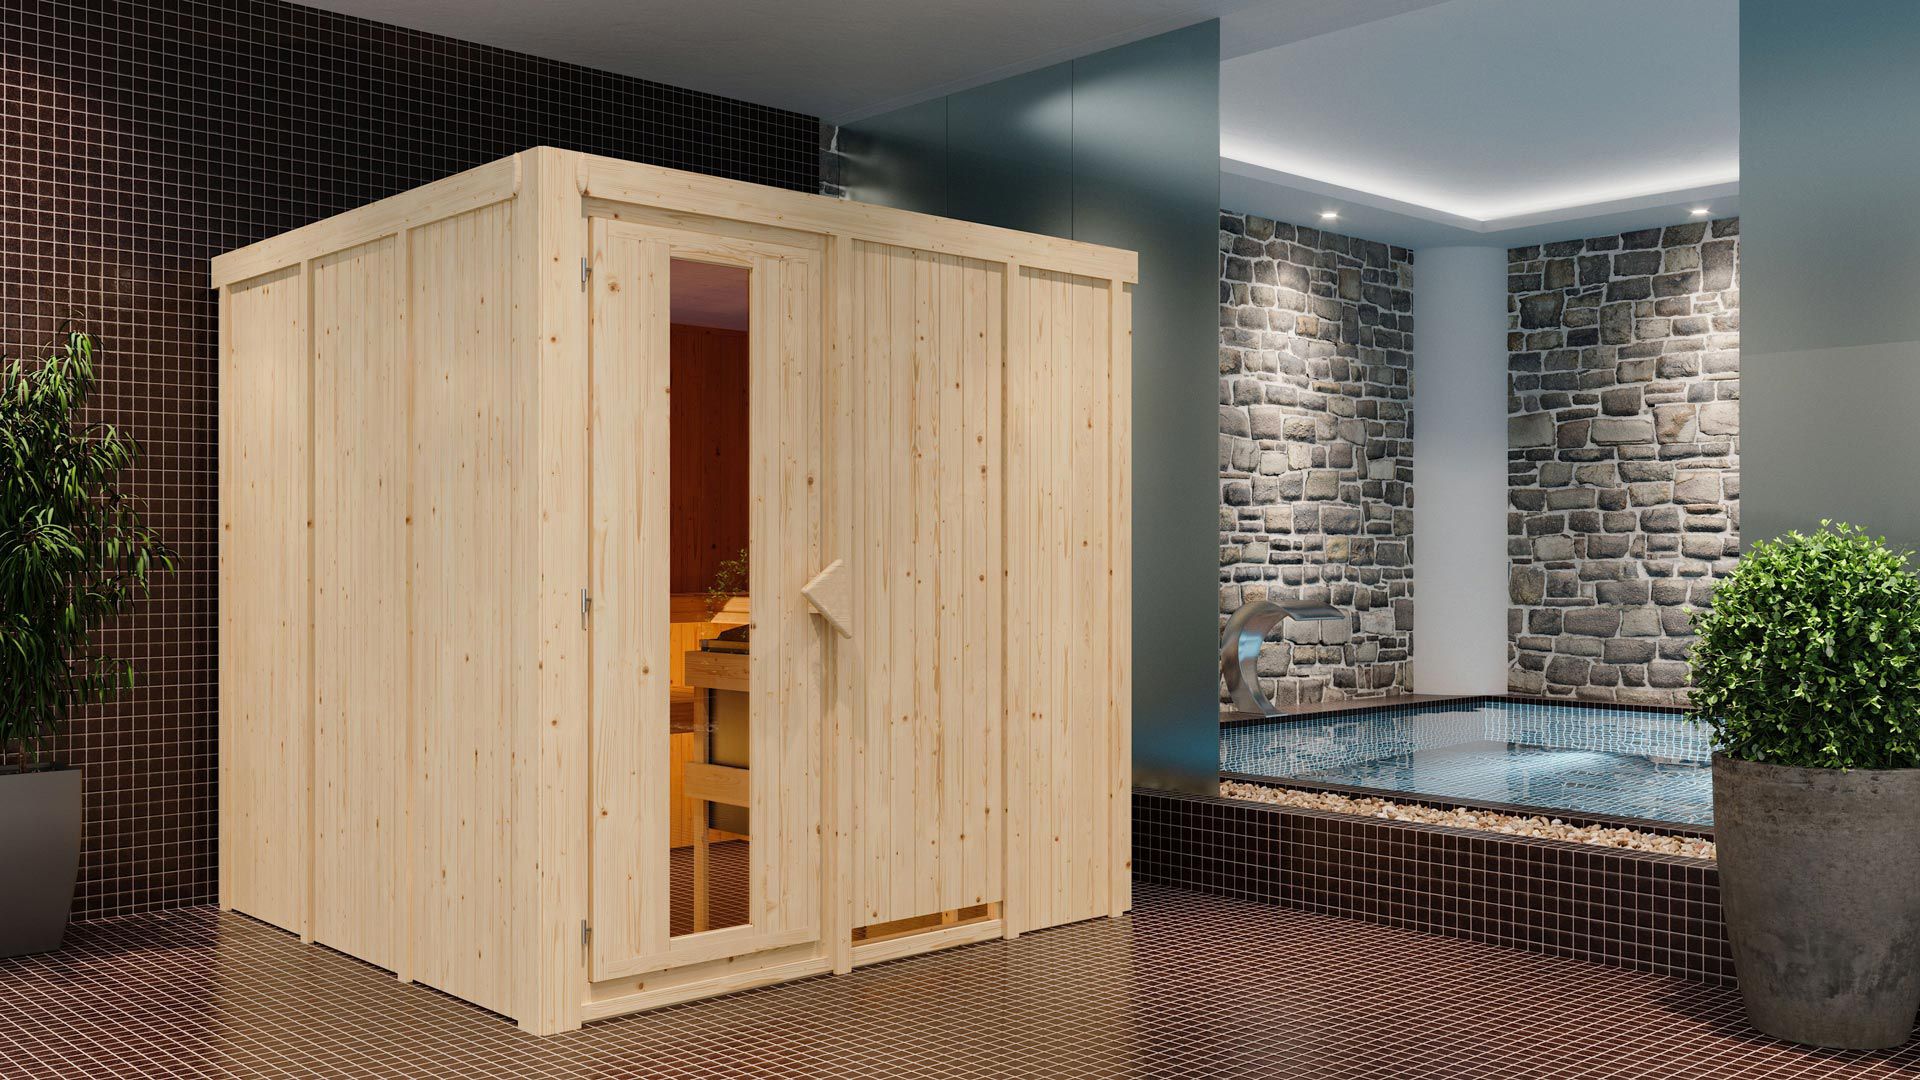 Sauna "Aleksi" SET mit Energiespartür - Farbe: Natur, Ofen BIO 9 kW - 196 x 196 x 198 cm (B x T x H)